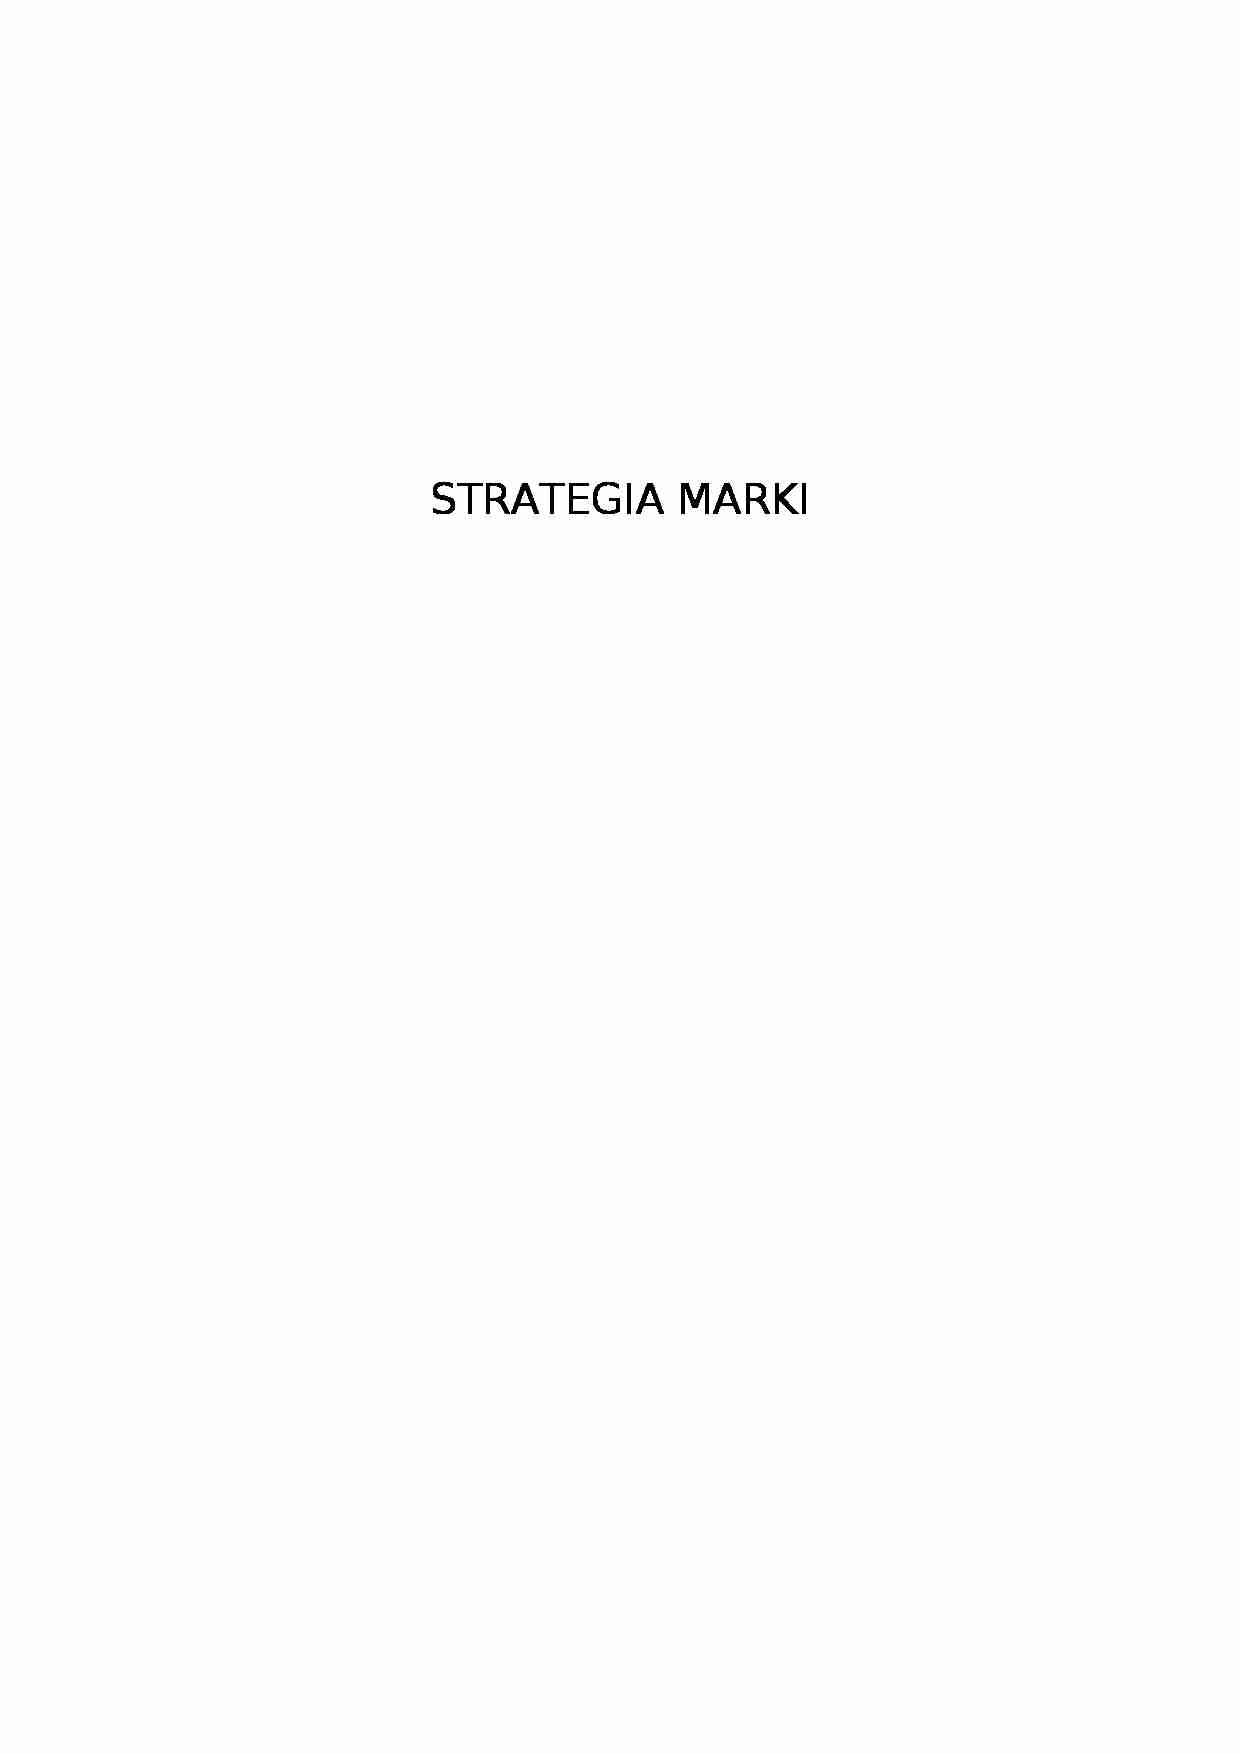 Strategia marki - strona 1